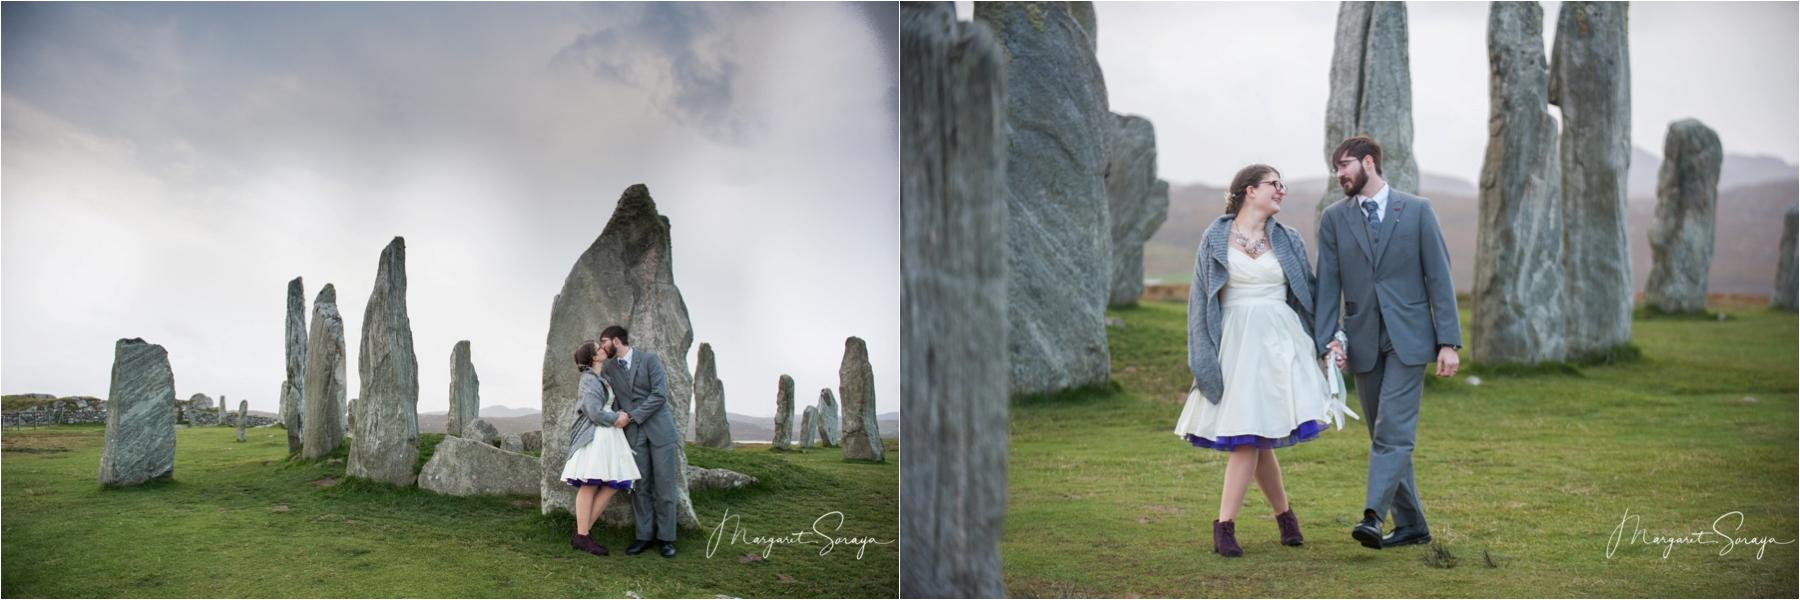 Callanish stones wedding stornoway elopement destination wedding photographer 